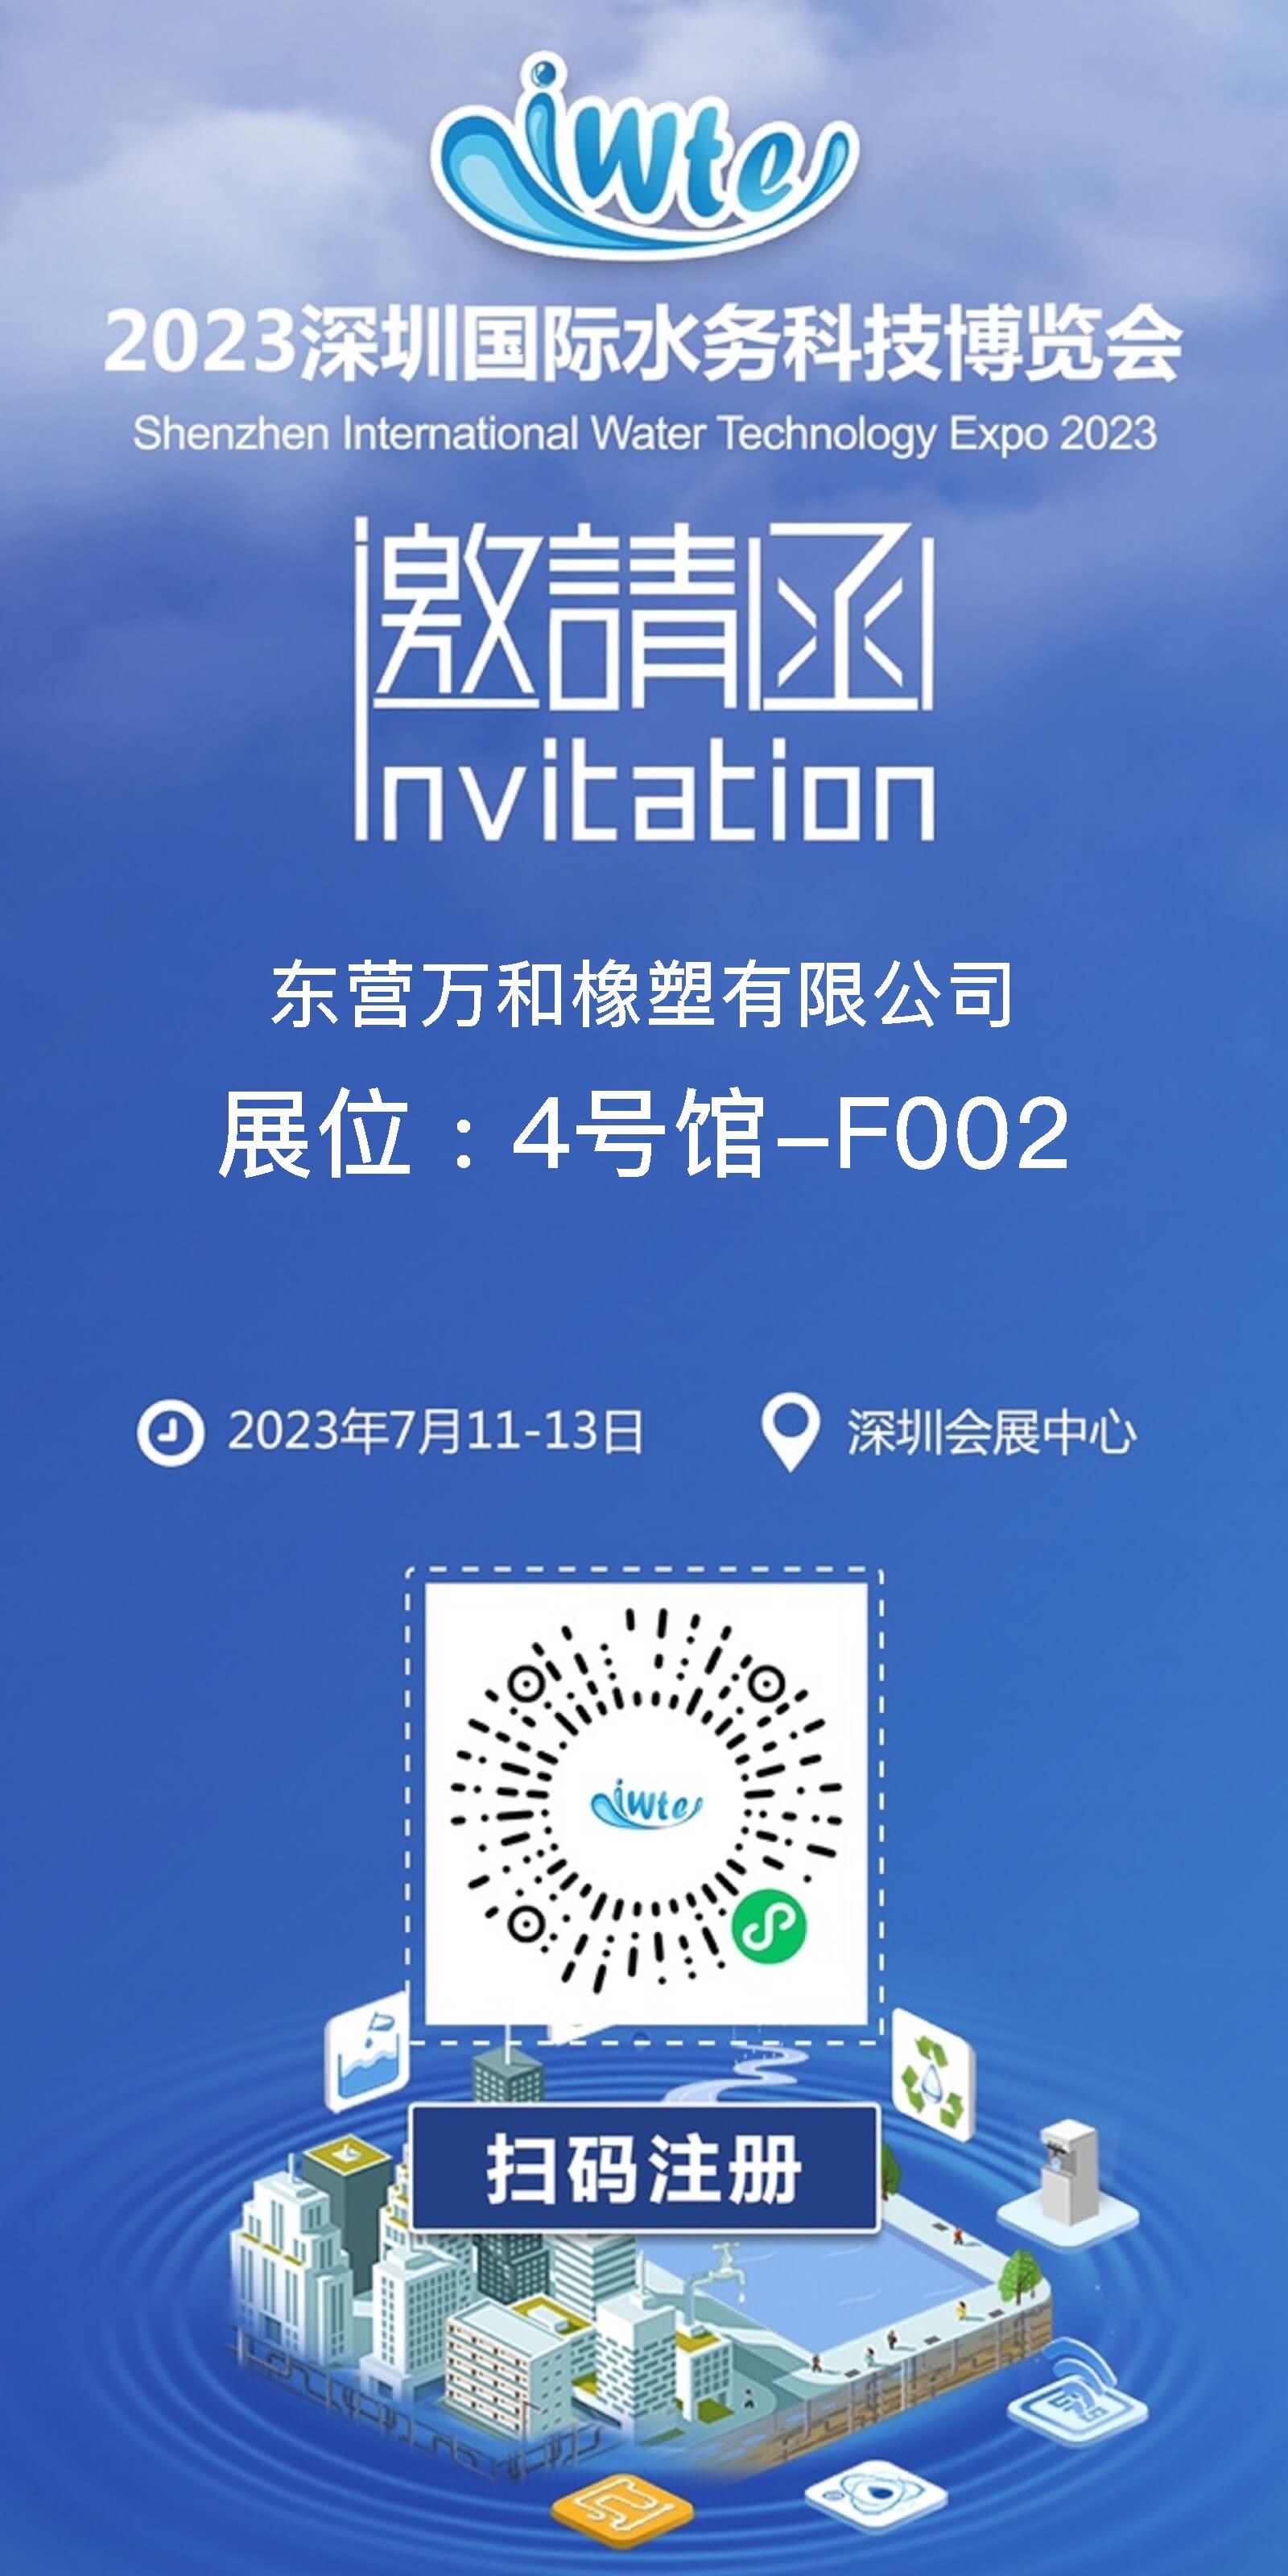 Shenzhen International Water Technology Expo 2023